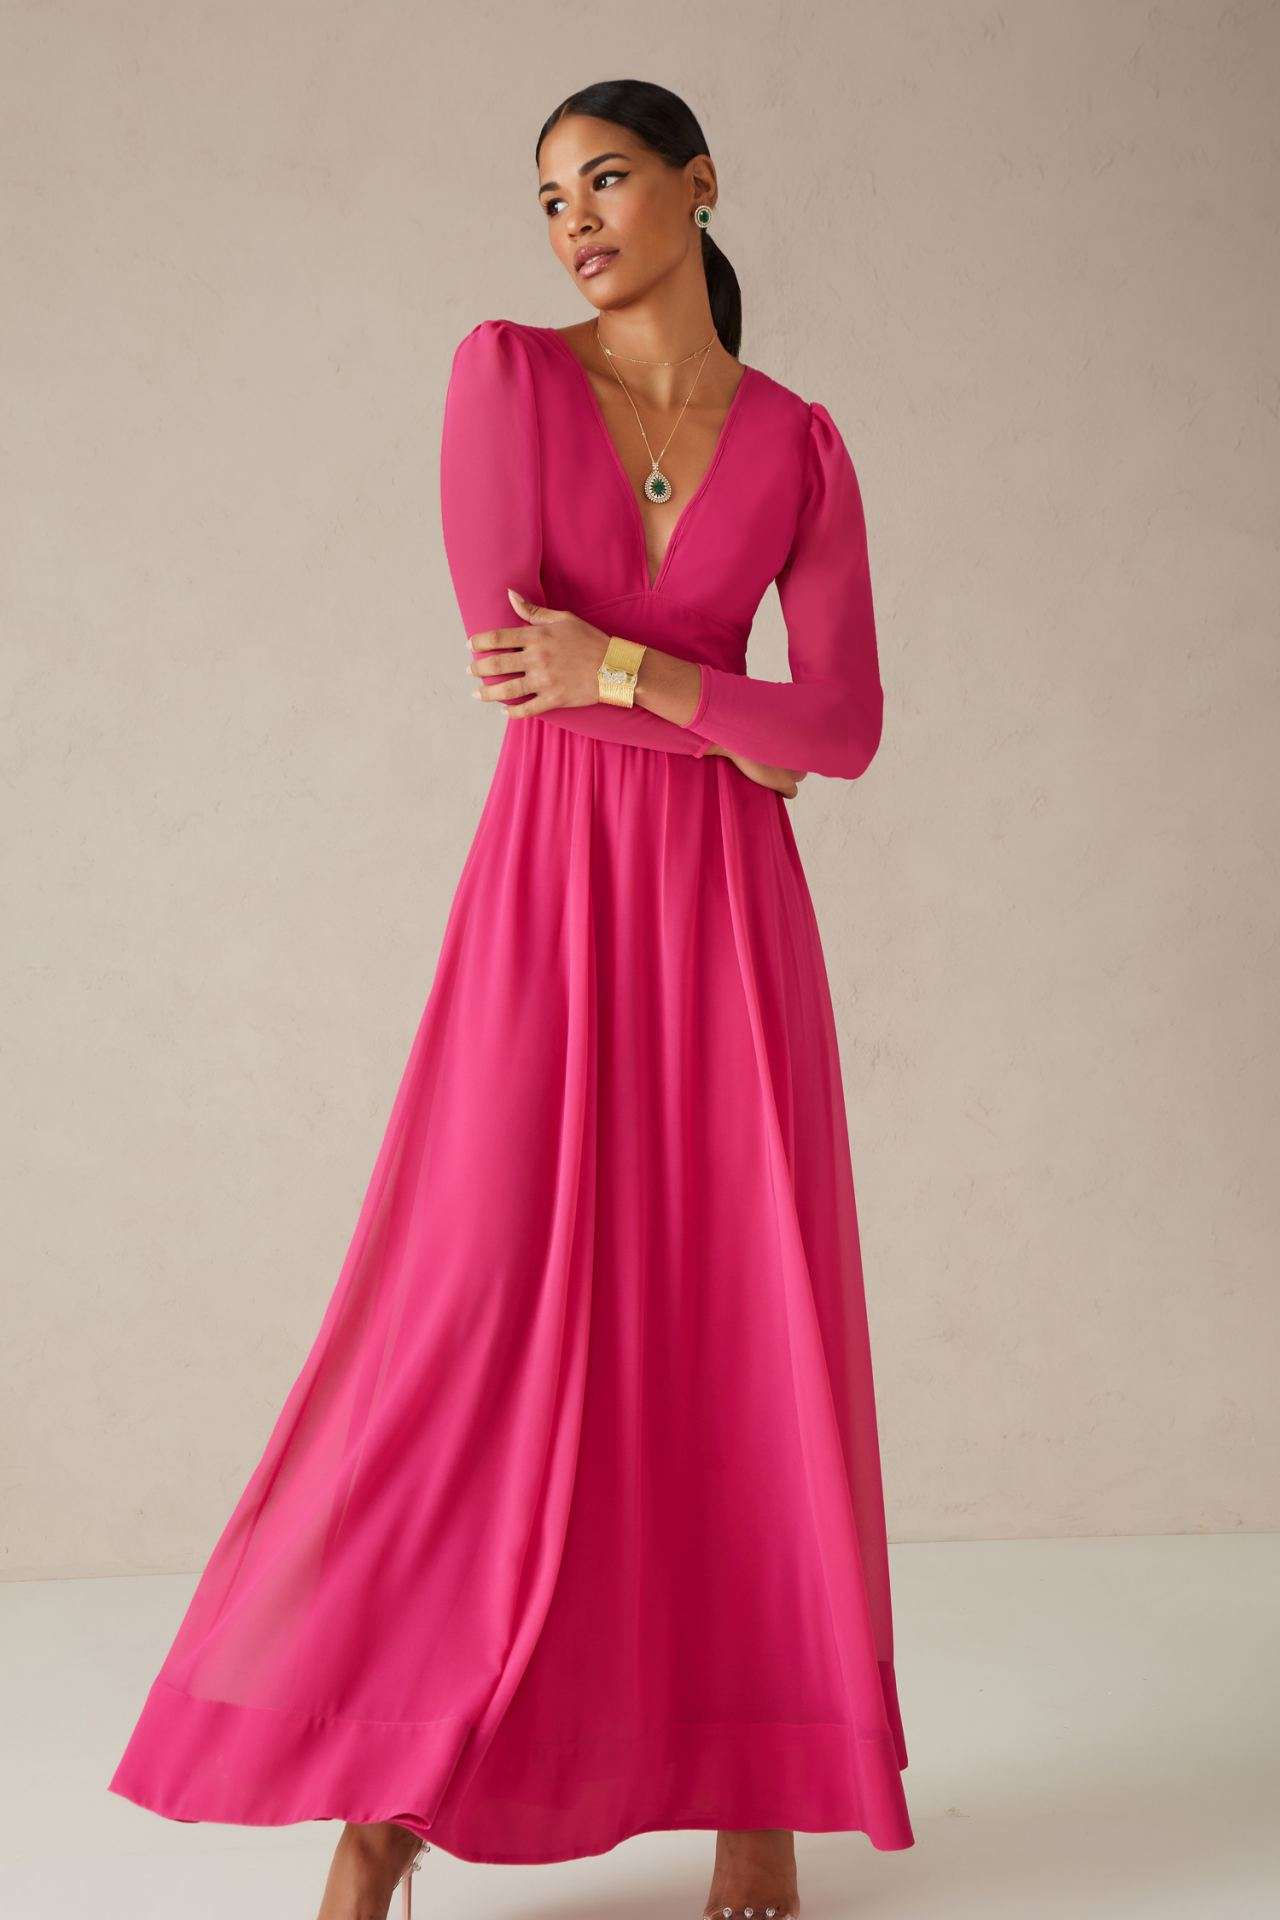 rosaazul_shop vestido longo decote v framboise